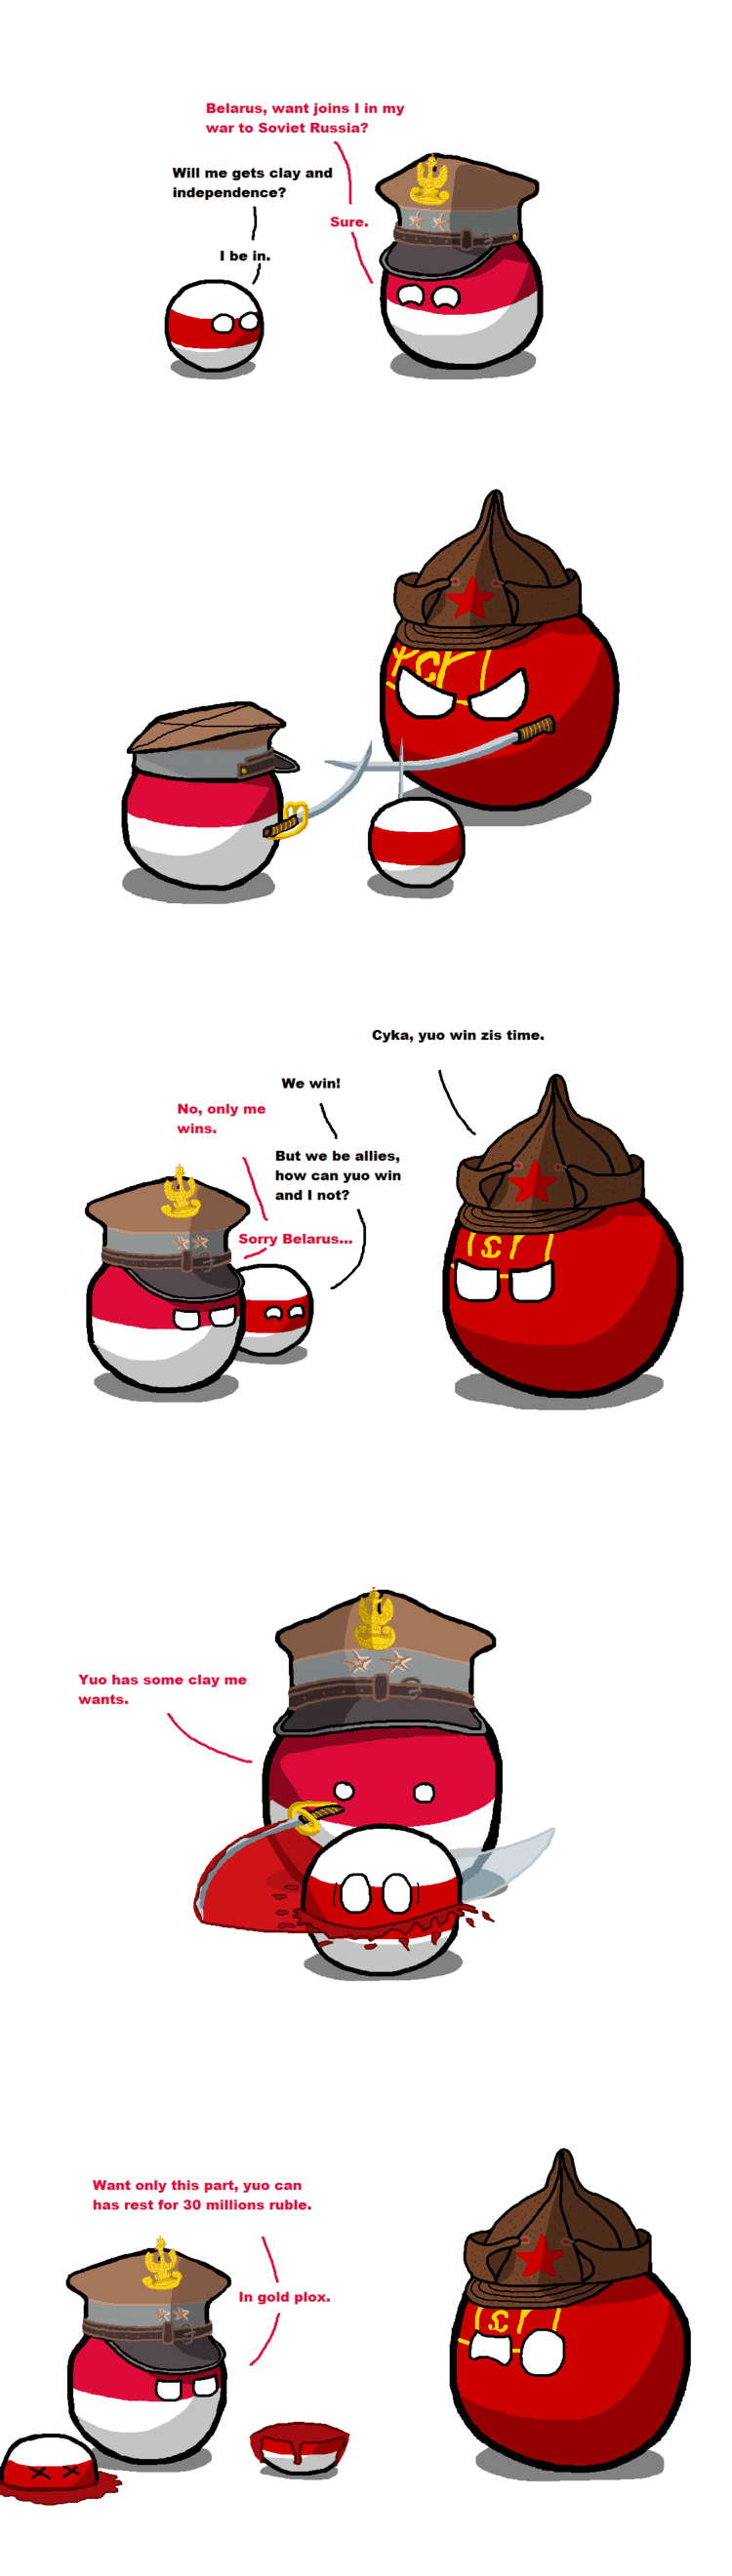 Polish–Soviet War PolishSoviet war polandball